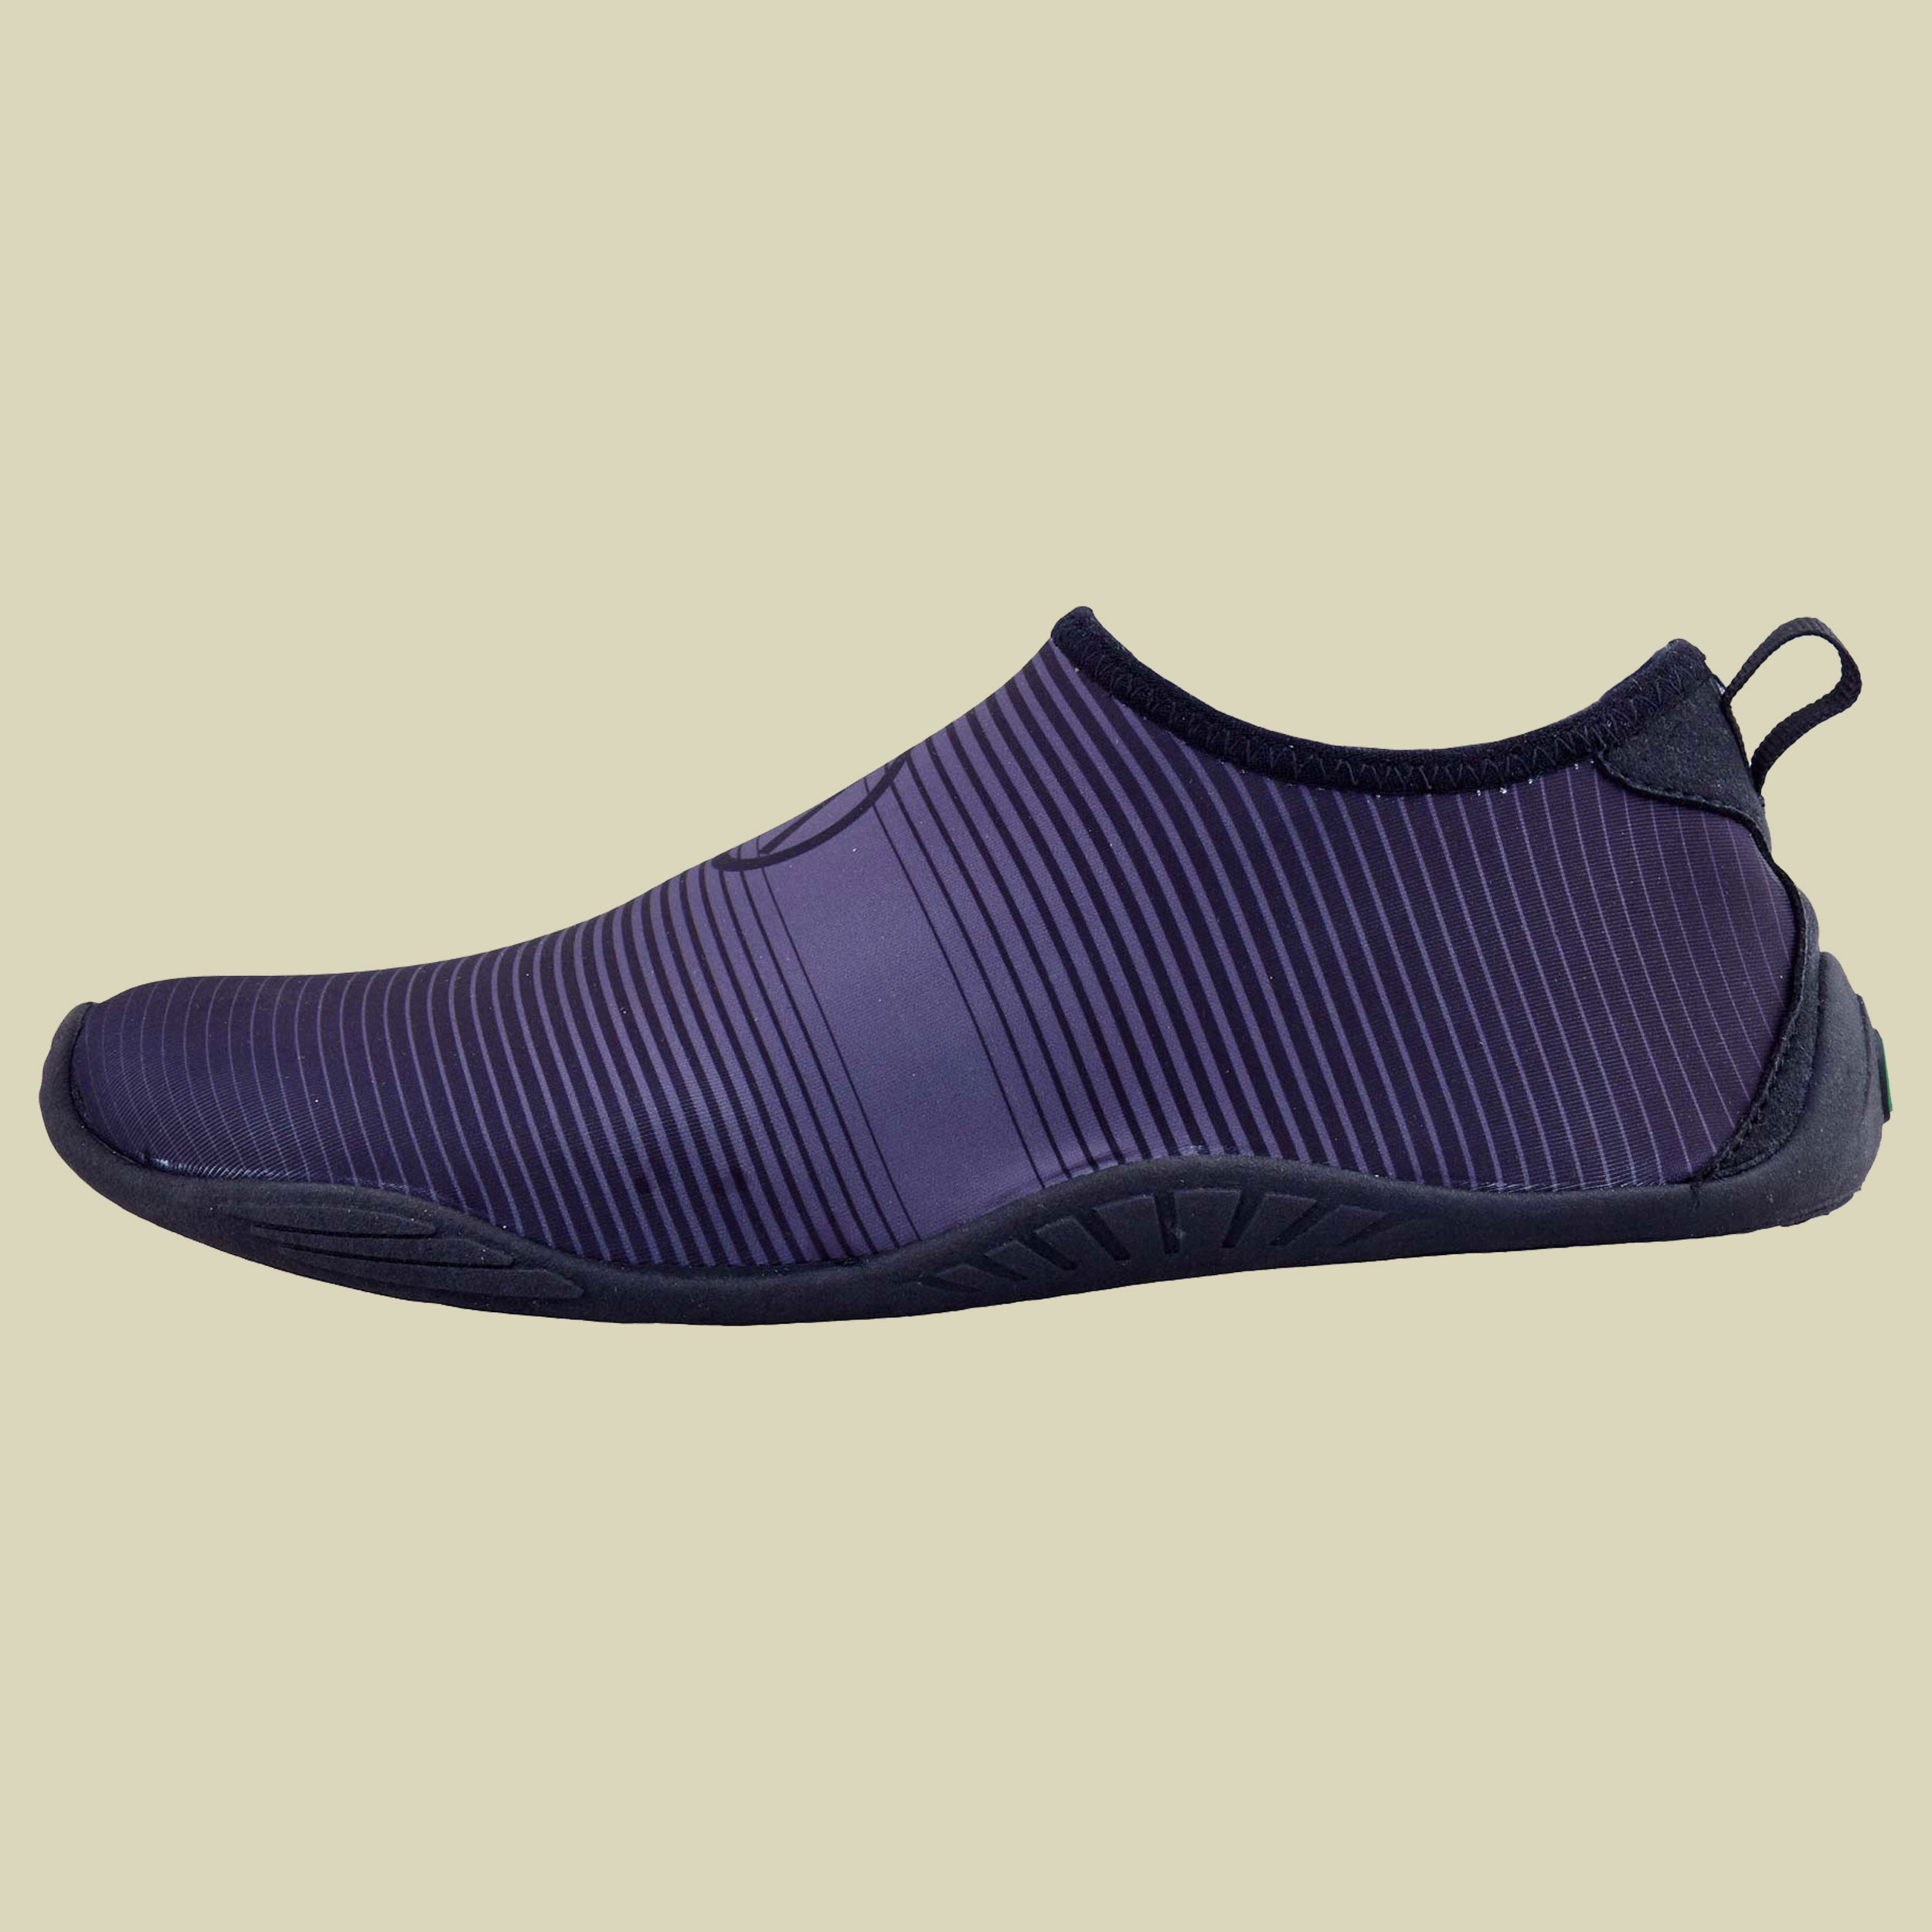 Spartan Barfuß-Schuhe Größe 36-37 Farbe astro black